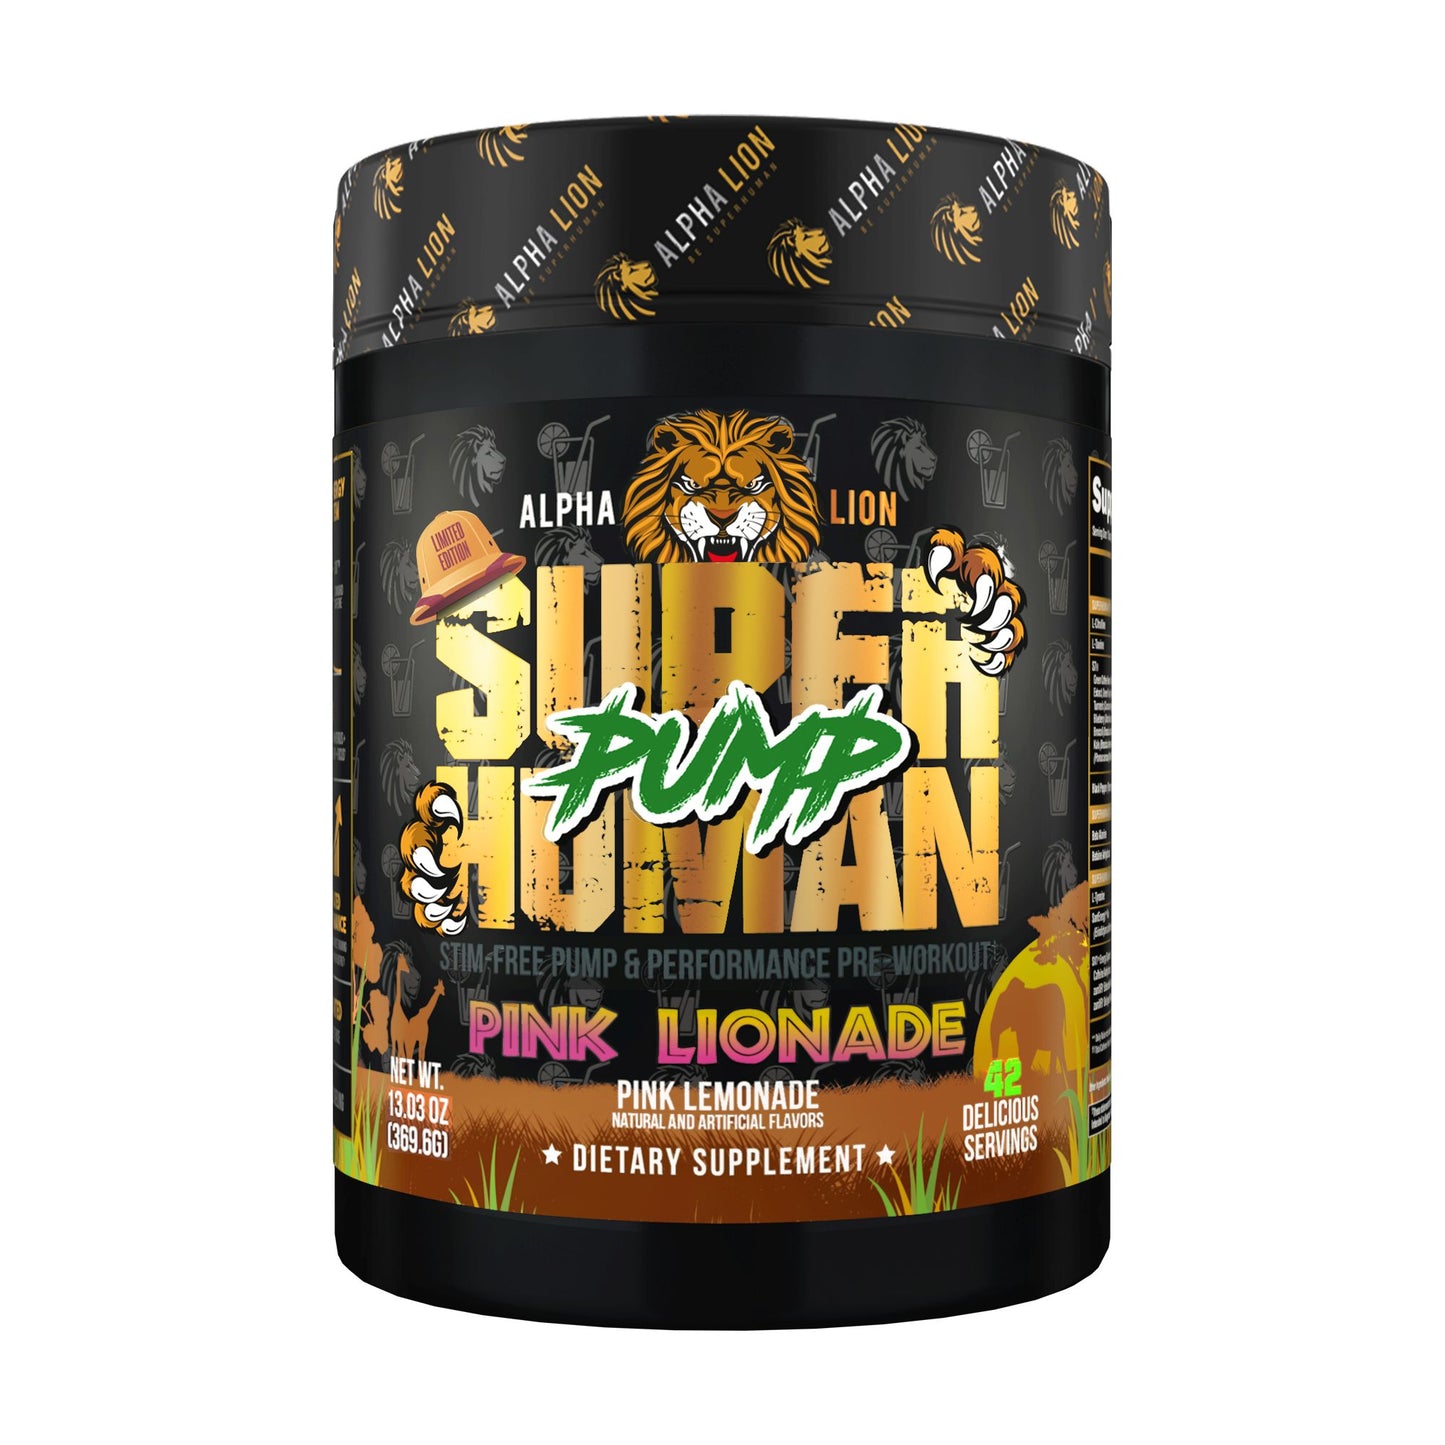 Alpha Lion Superhuman Pump